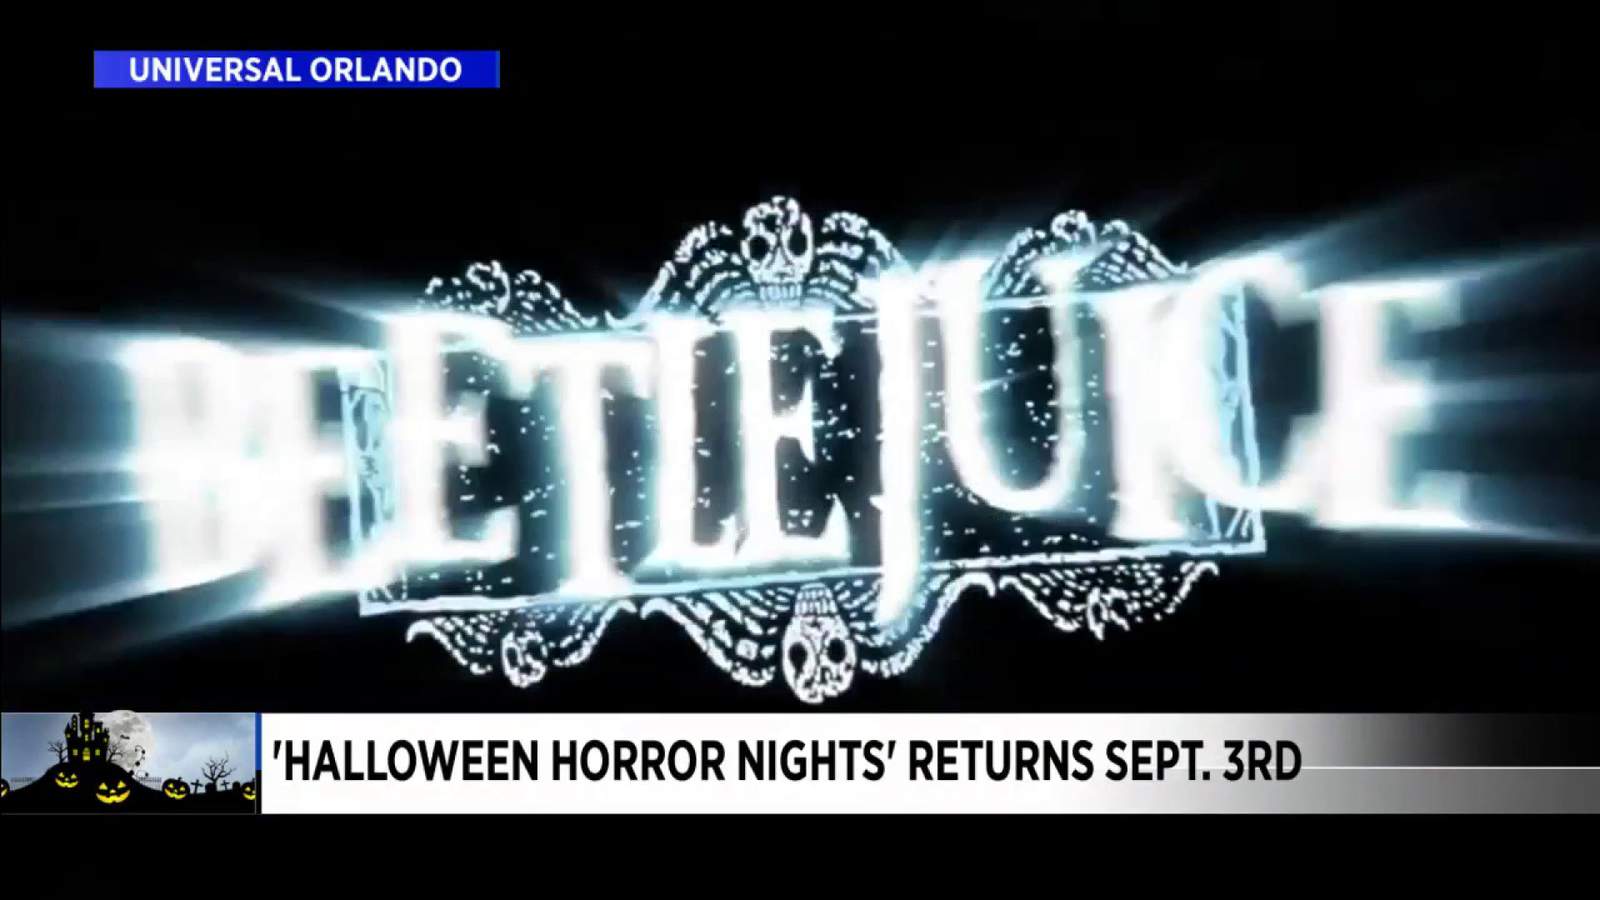 ‘It’s showtime’ Beetlejuice will headline Halloween Horror Nights in Orlando